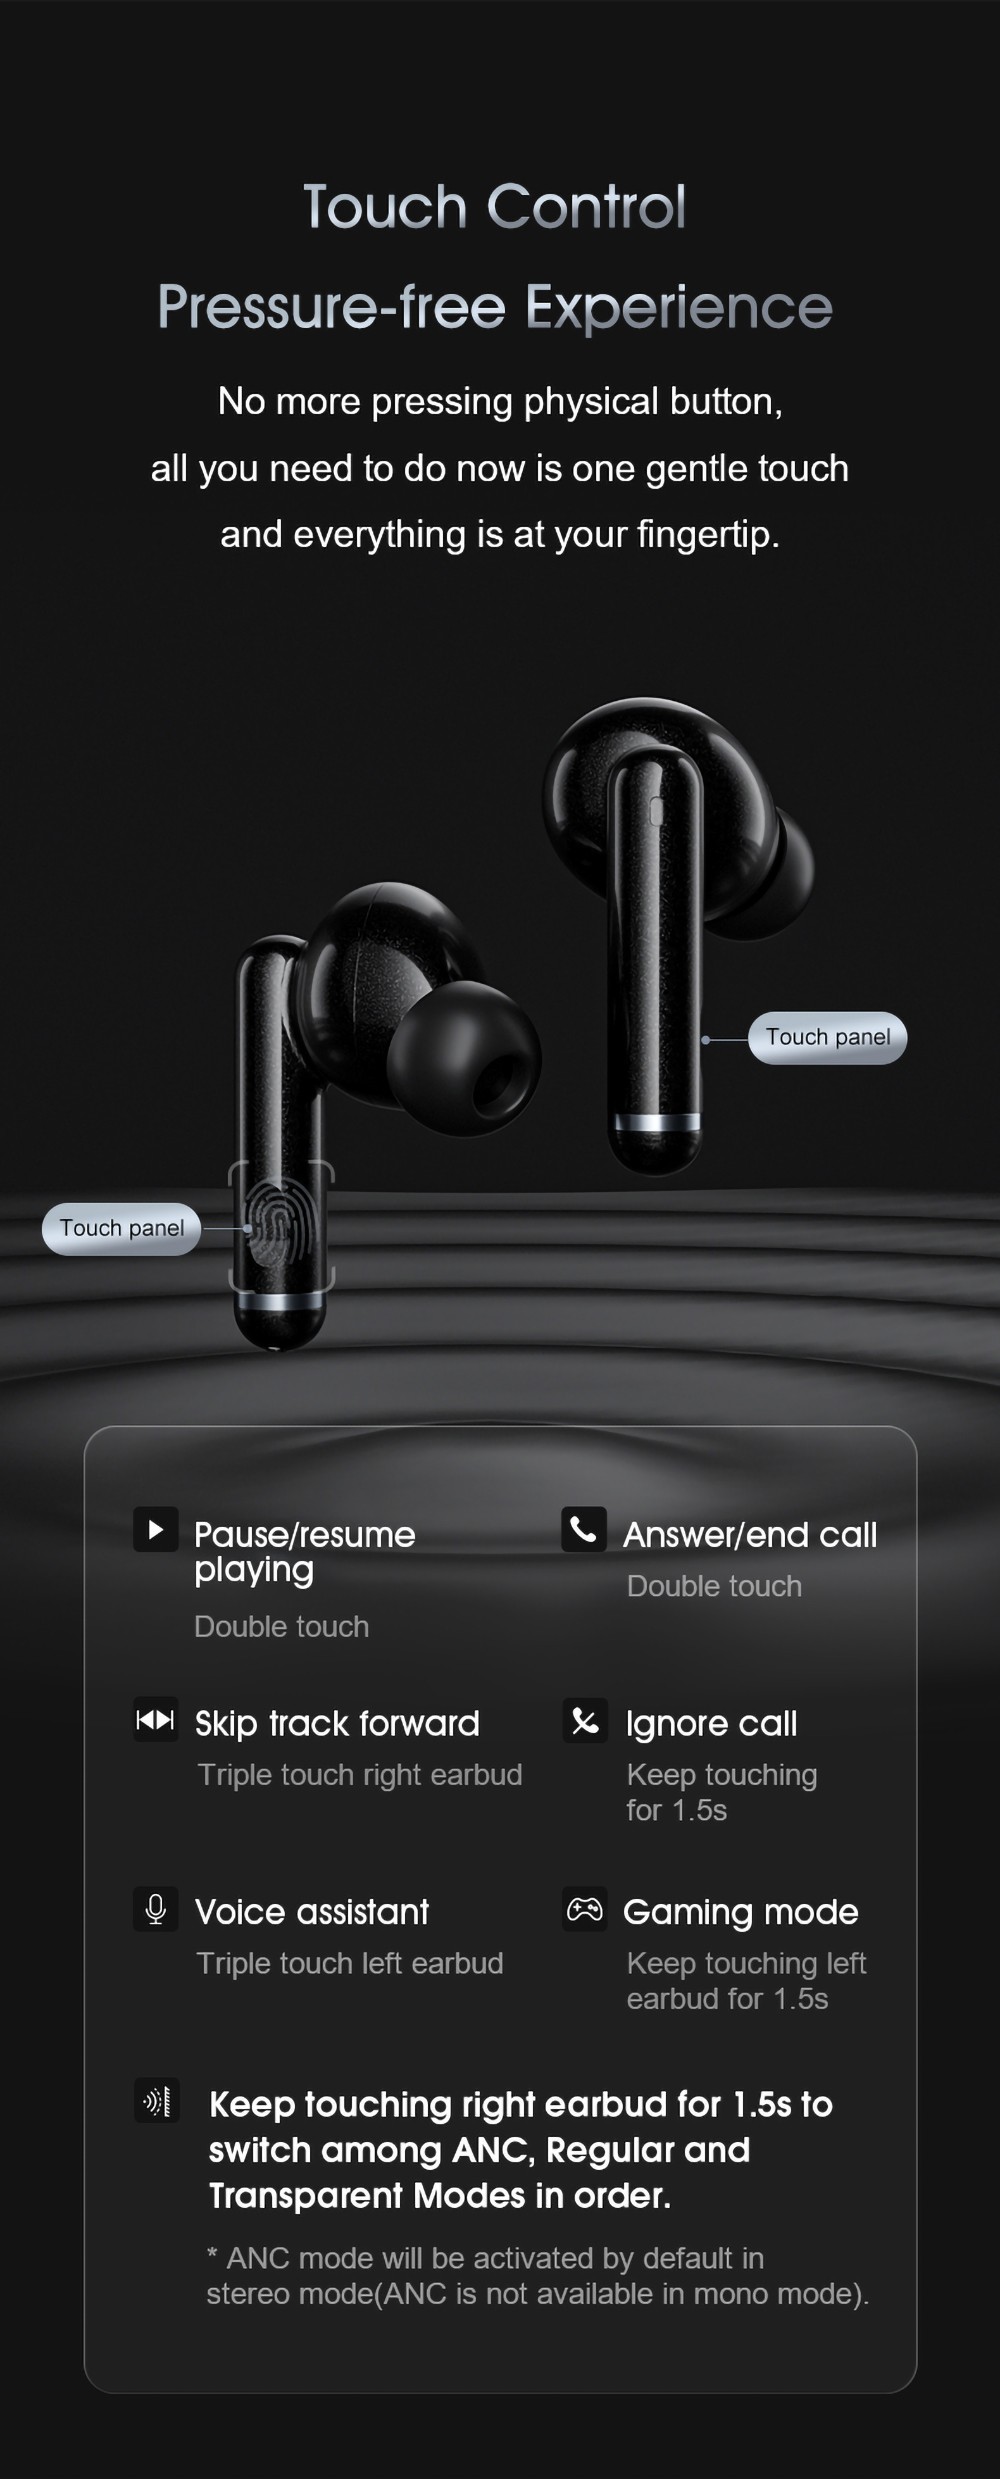 QCY HT03 Bluetooth 5.1 TWS หูฟังไร้สายตัดเสียงรบกวนที่ใช้งาน